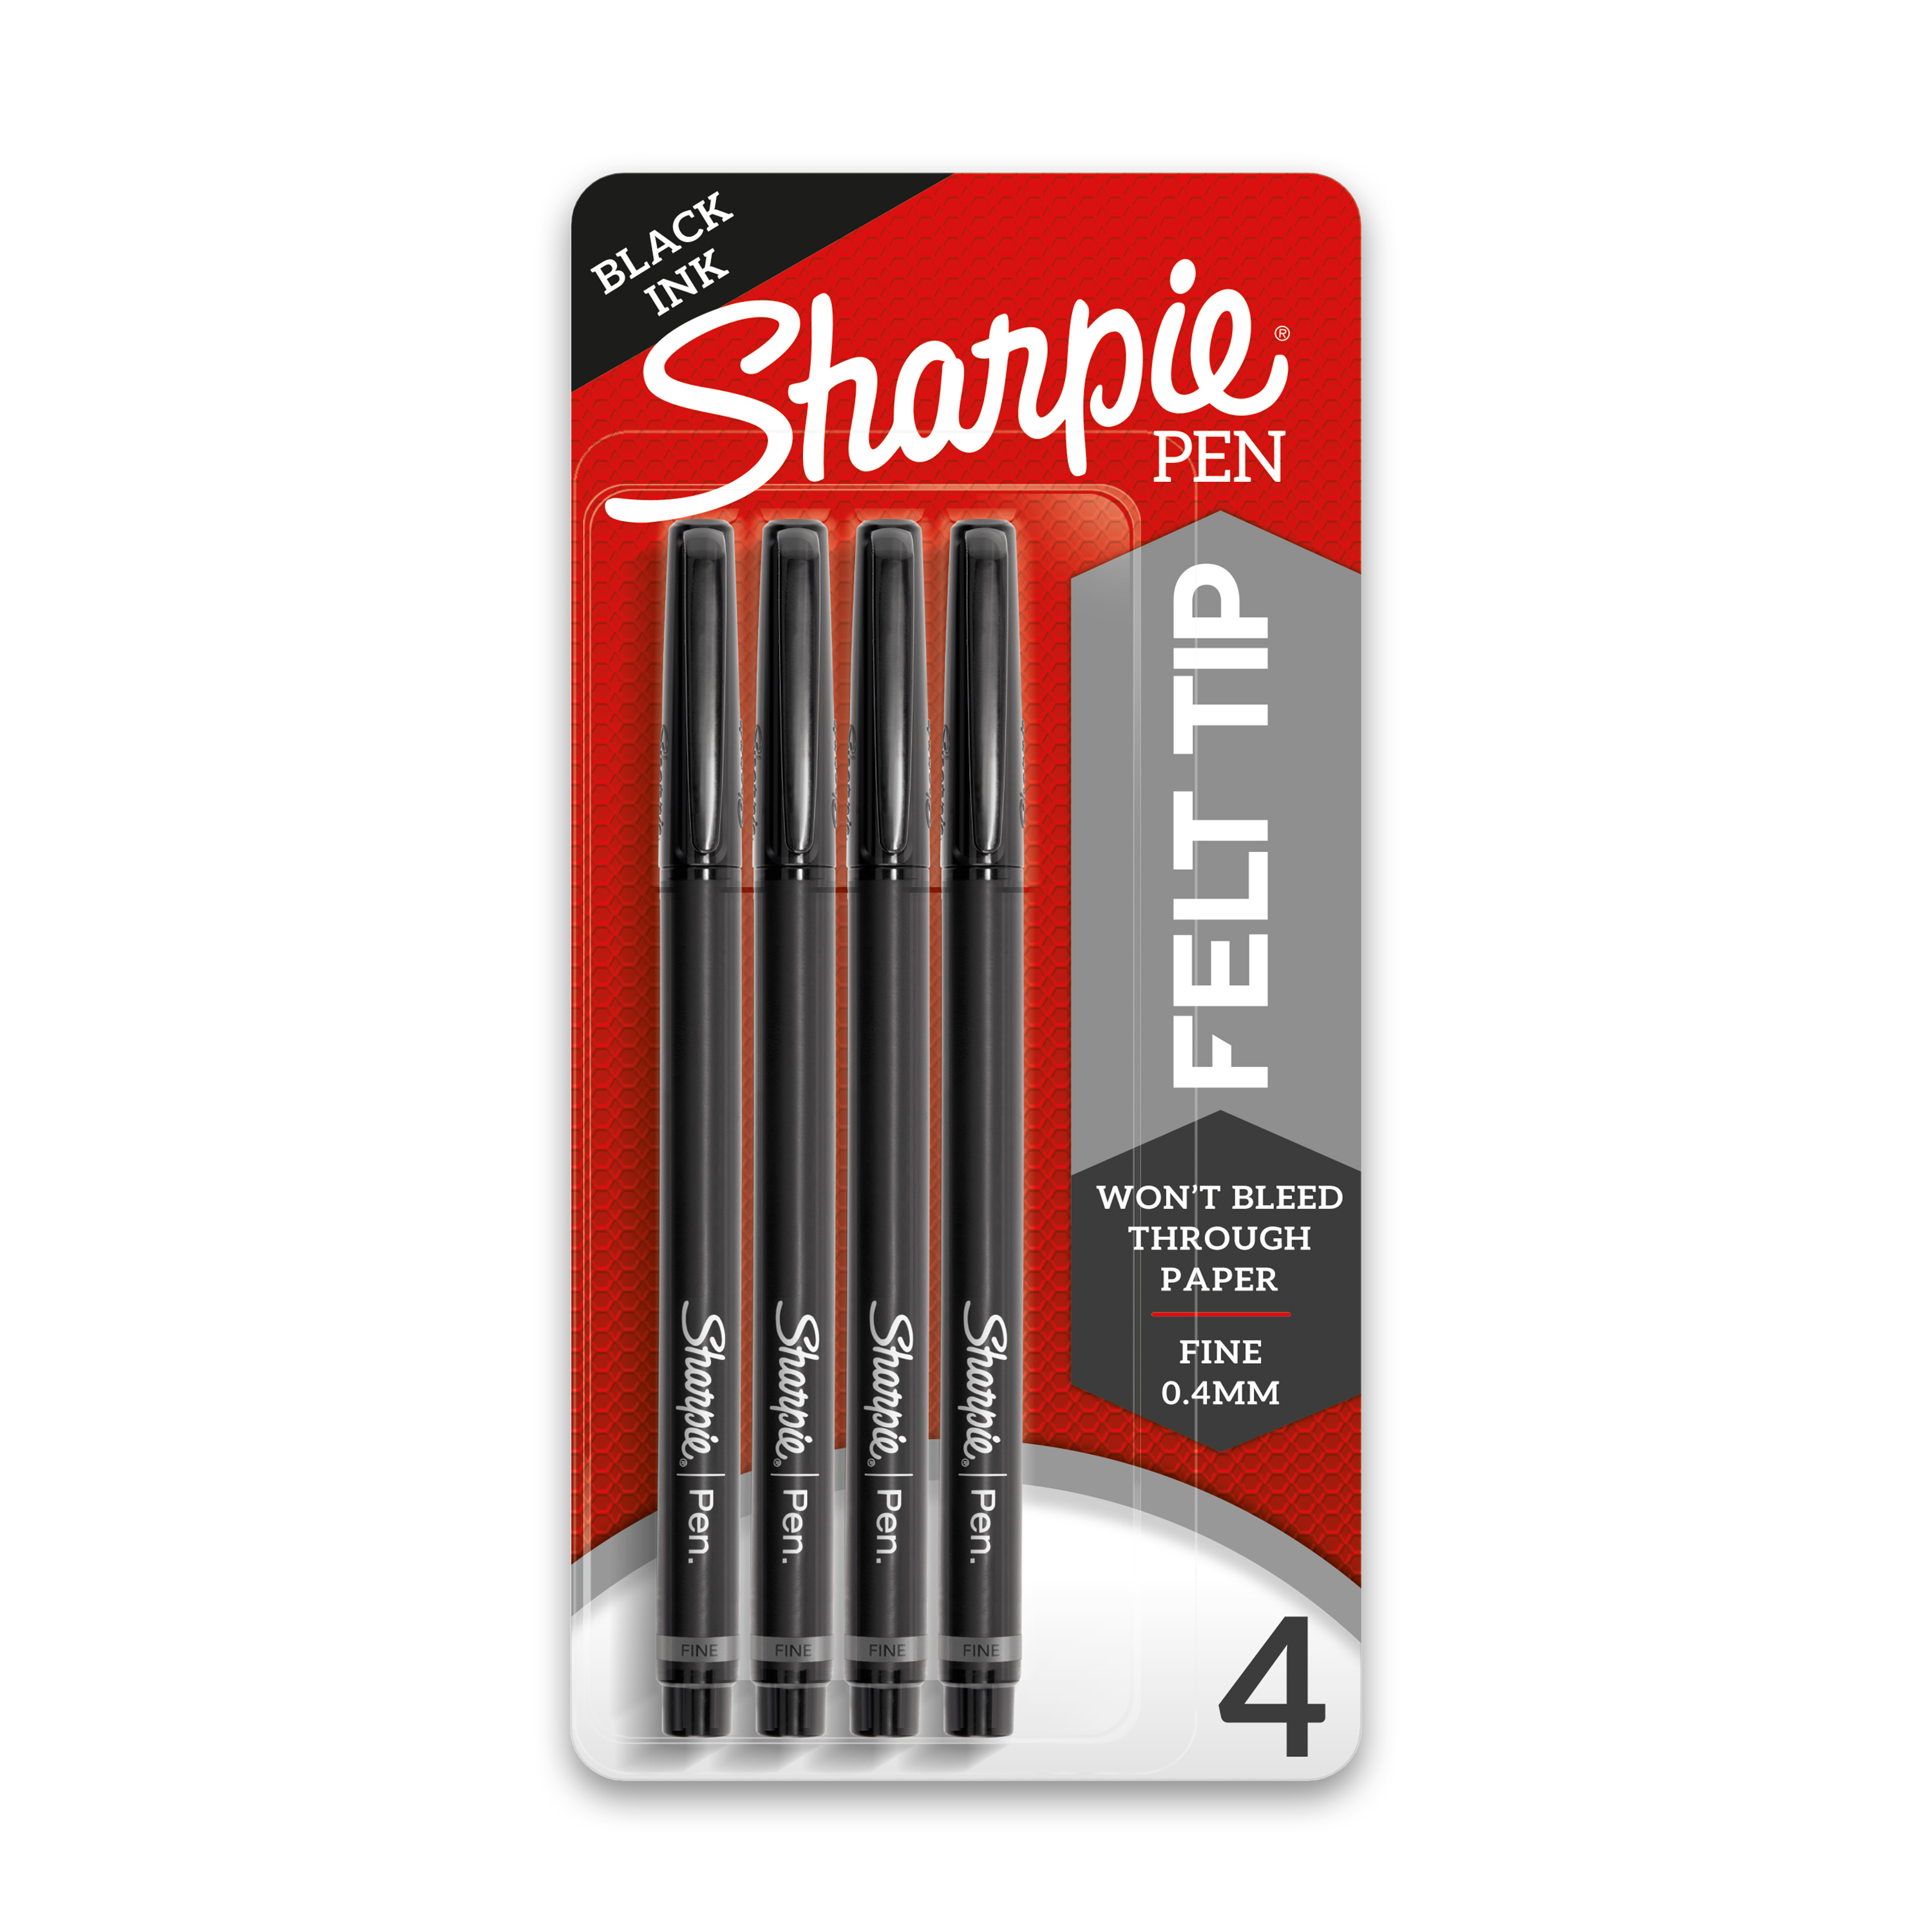 Sharpie Pens, Felt Tip Pens, Fine Point (0.4mm), Black, 4 Count - image 1 of 7